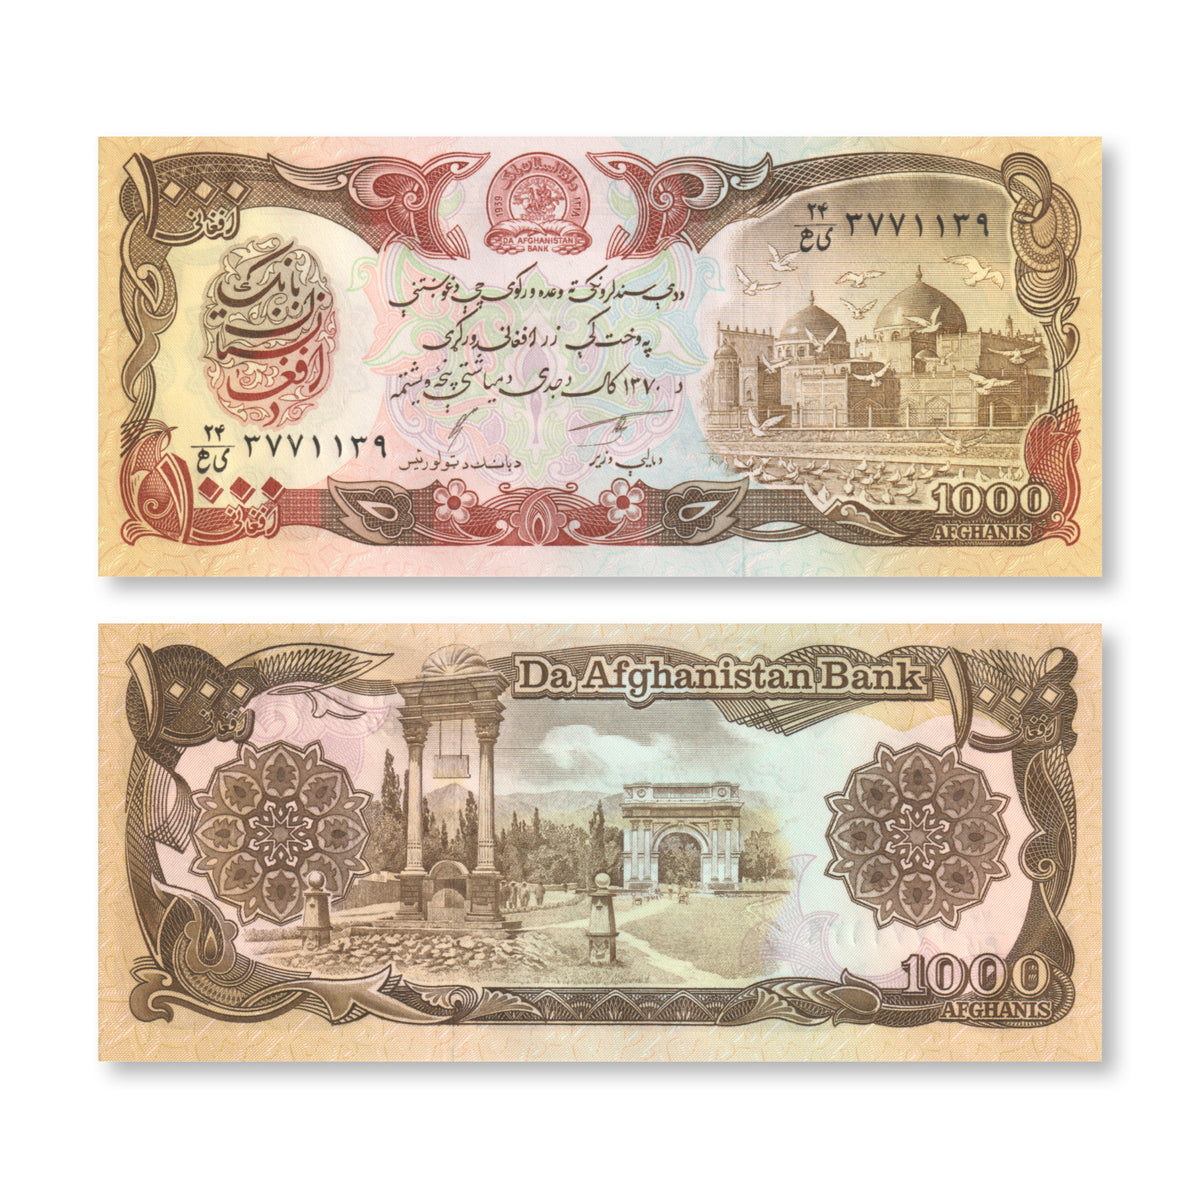 Afghanistan 1000 Afghanis, 1991, B345d1, P61c, UNC - Robert's World Money - World Banknotes